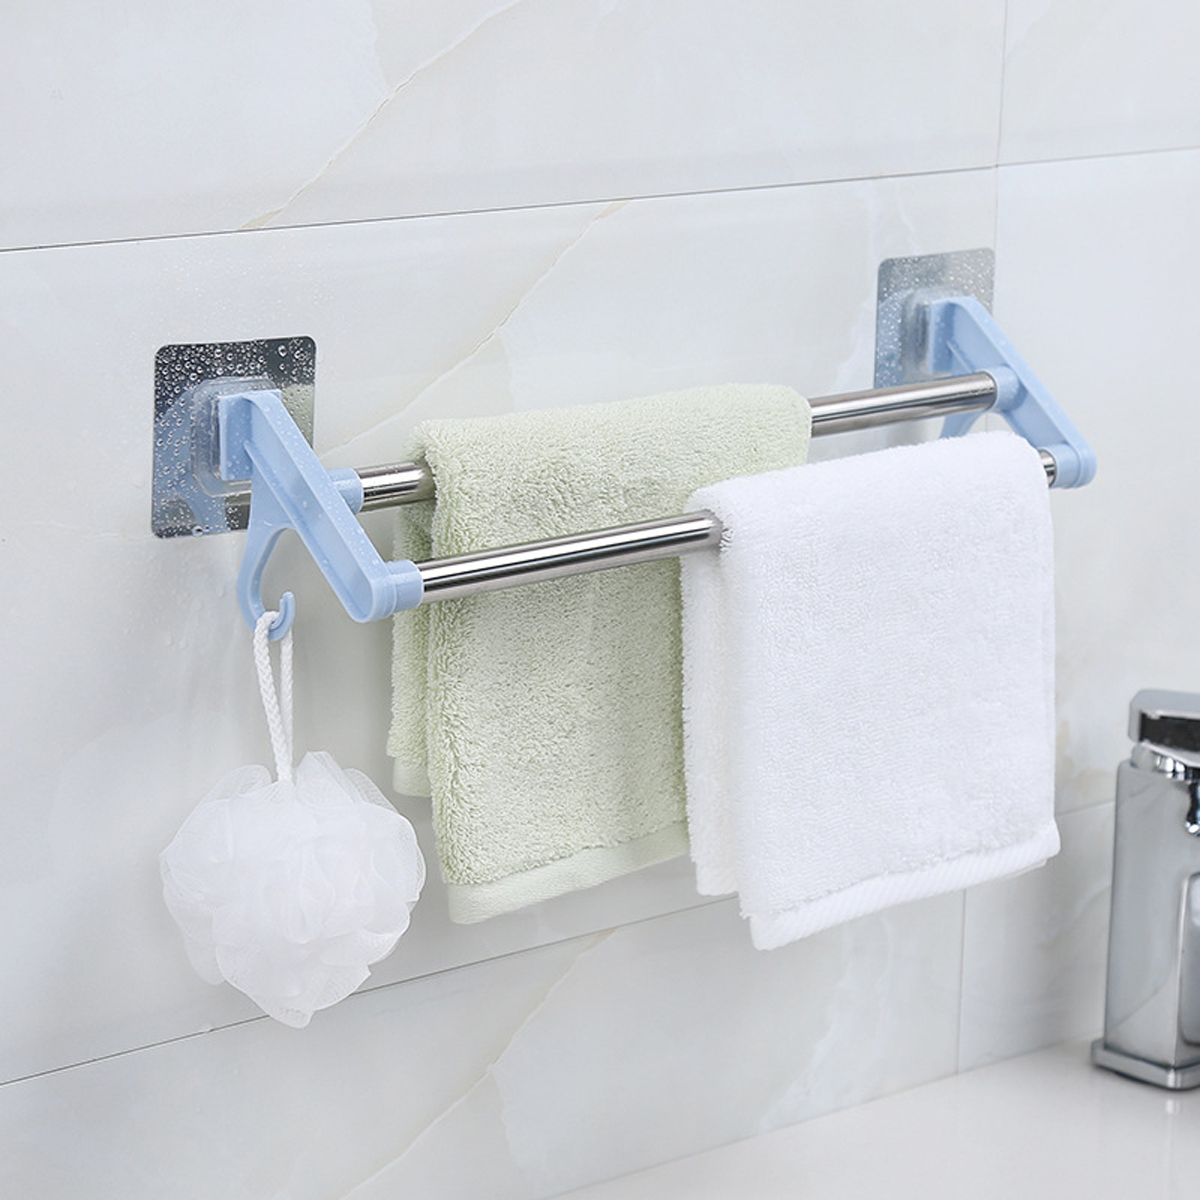 Suction-Cup-Bathroom-Kitchen-Double-Towel-Holder-Rack-Rail-Shelf-Rack-Hanger-Bar-1312699